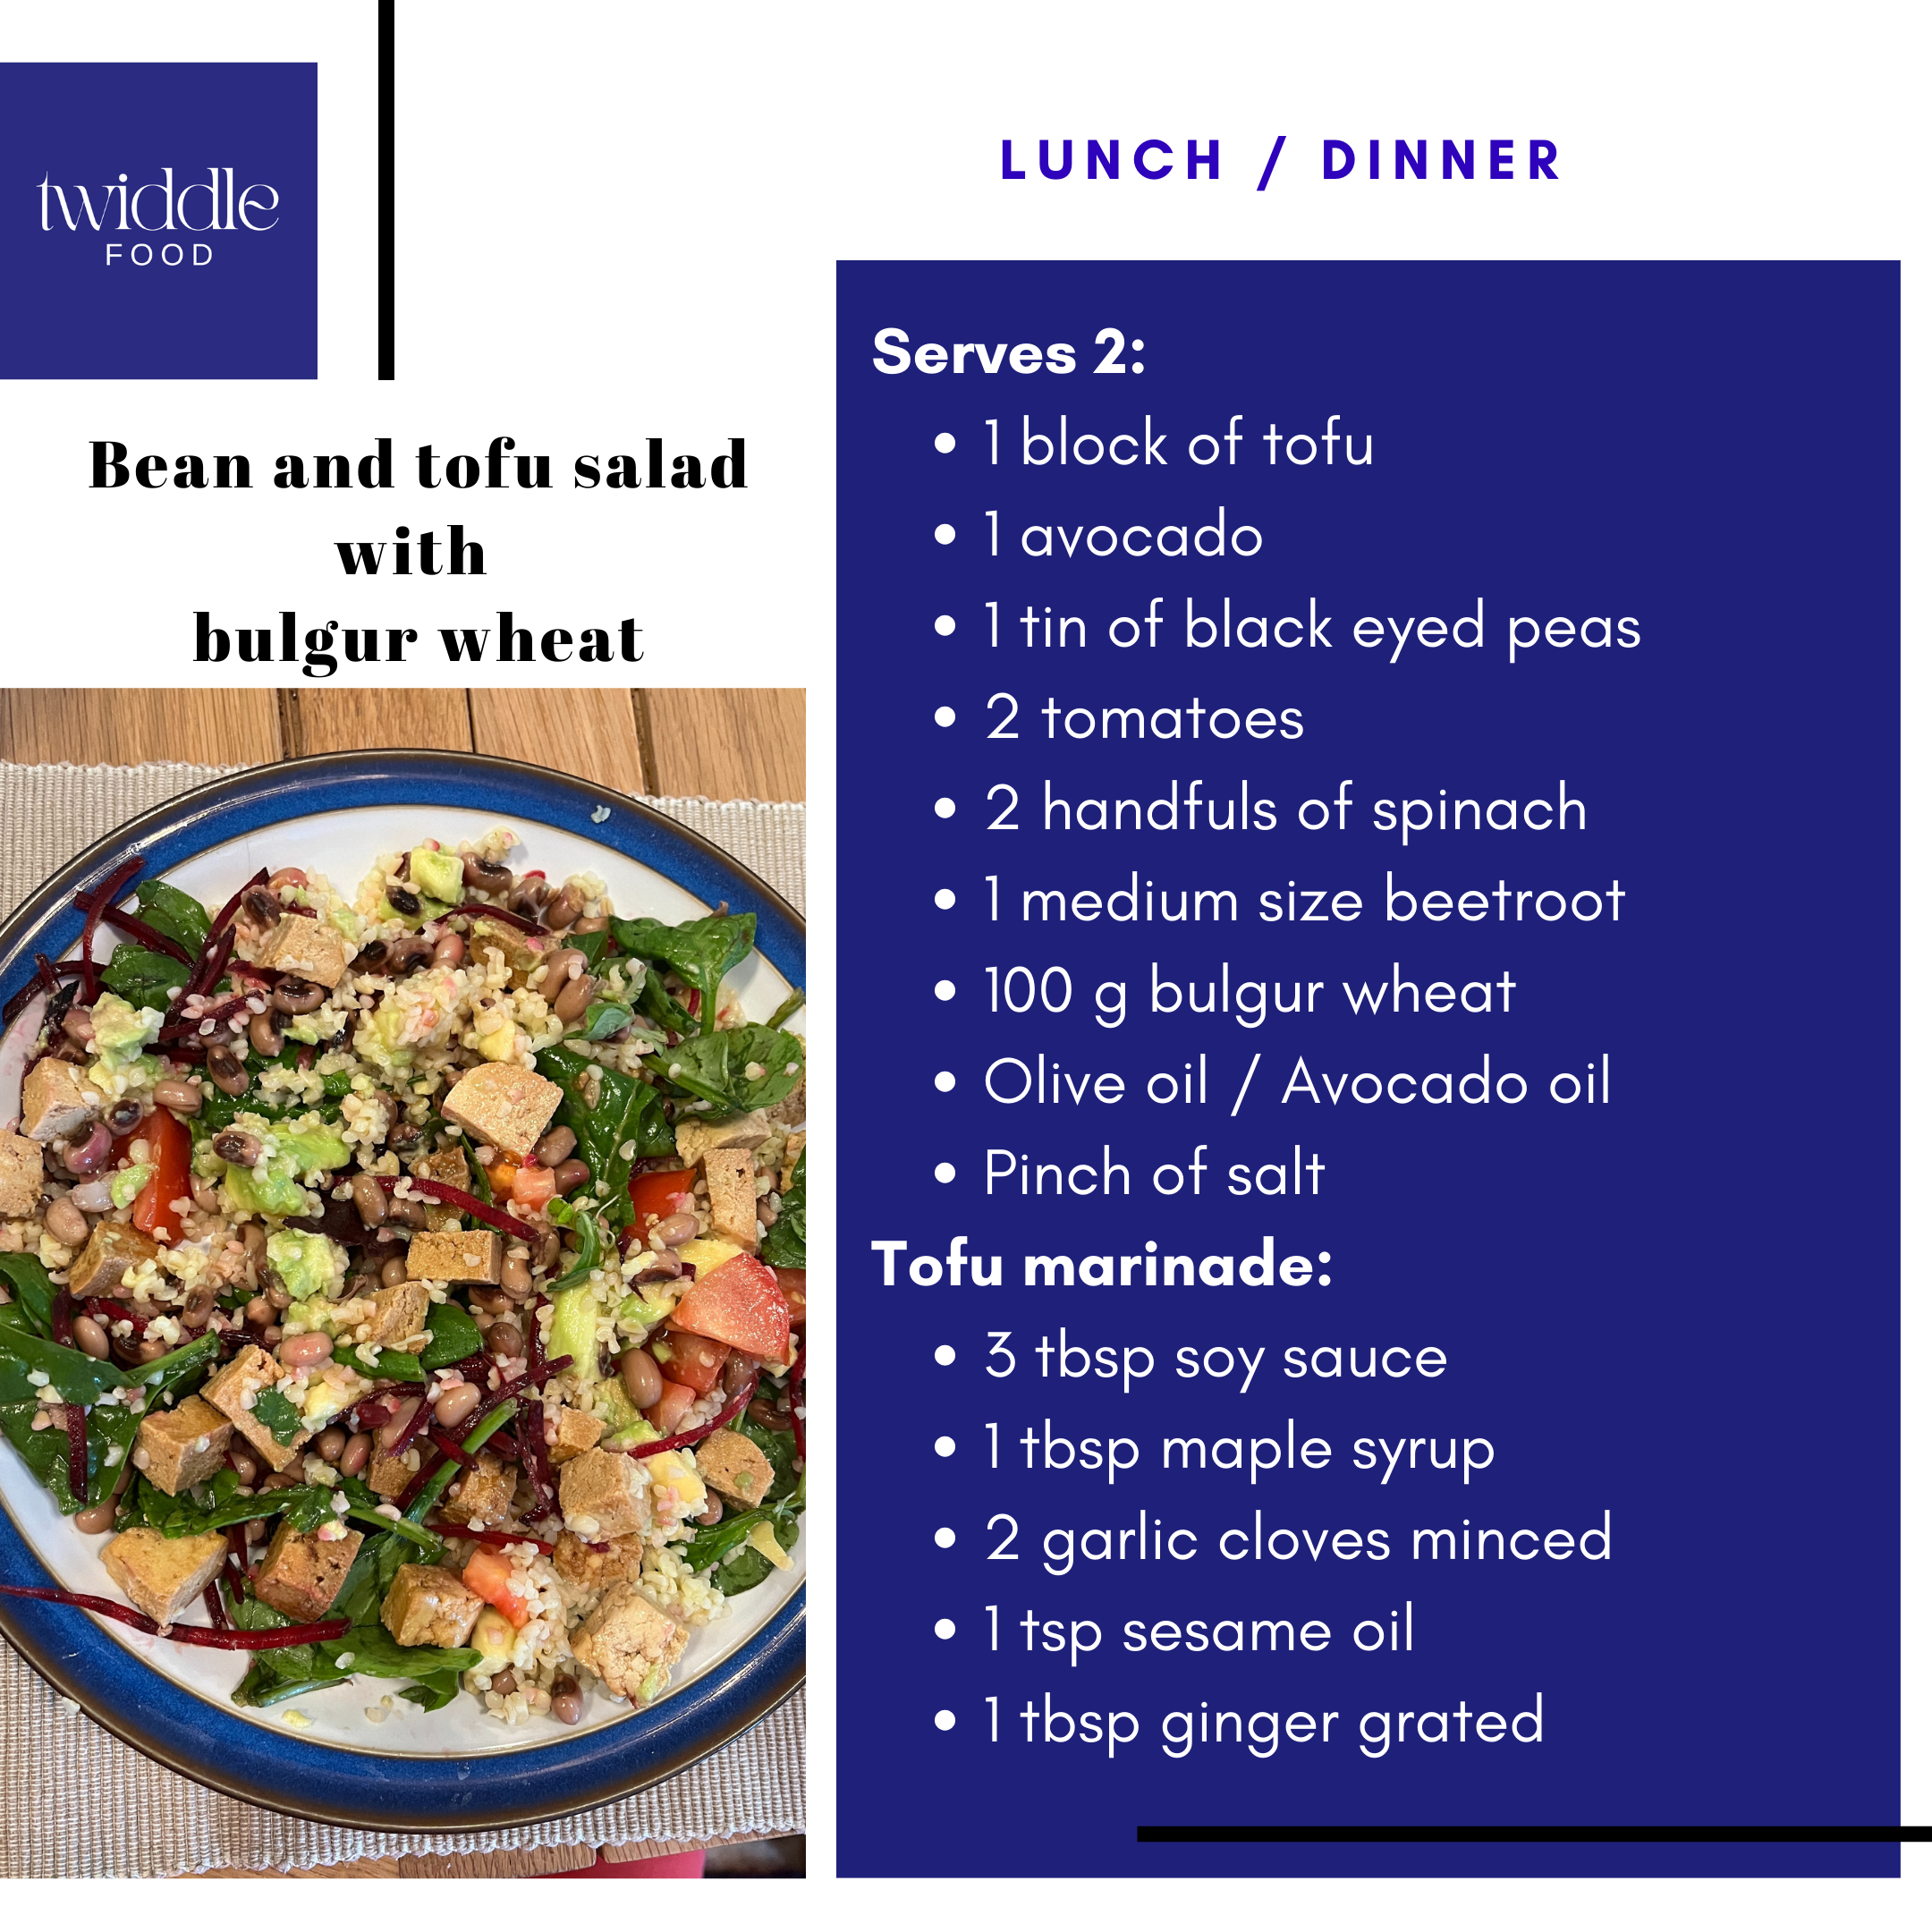 Bean and tofu salad with bulgur wheat